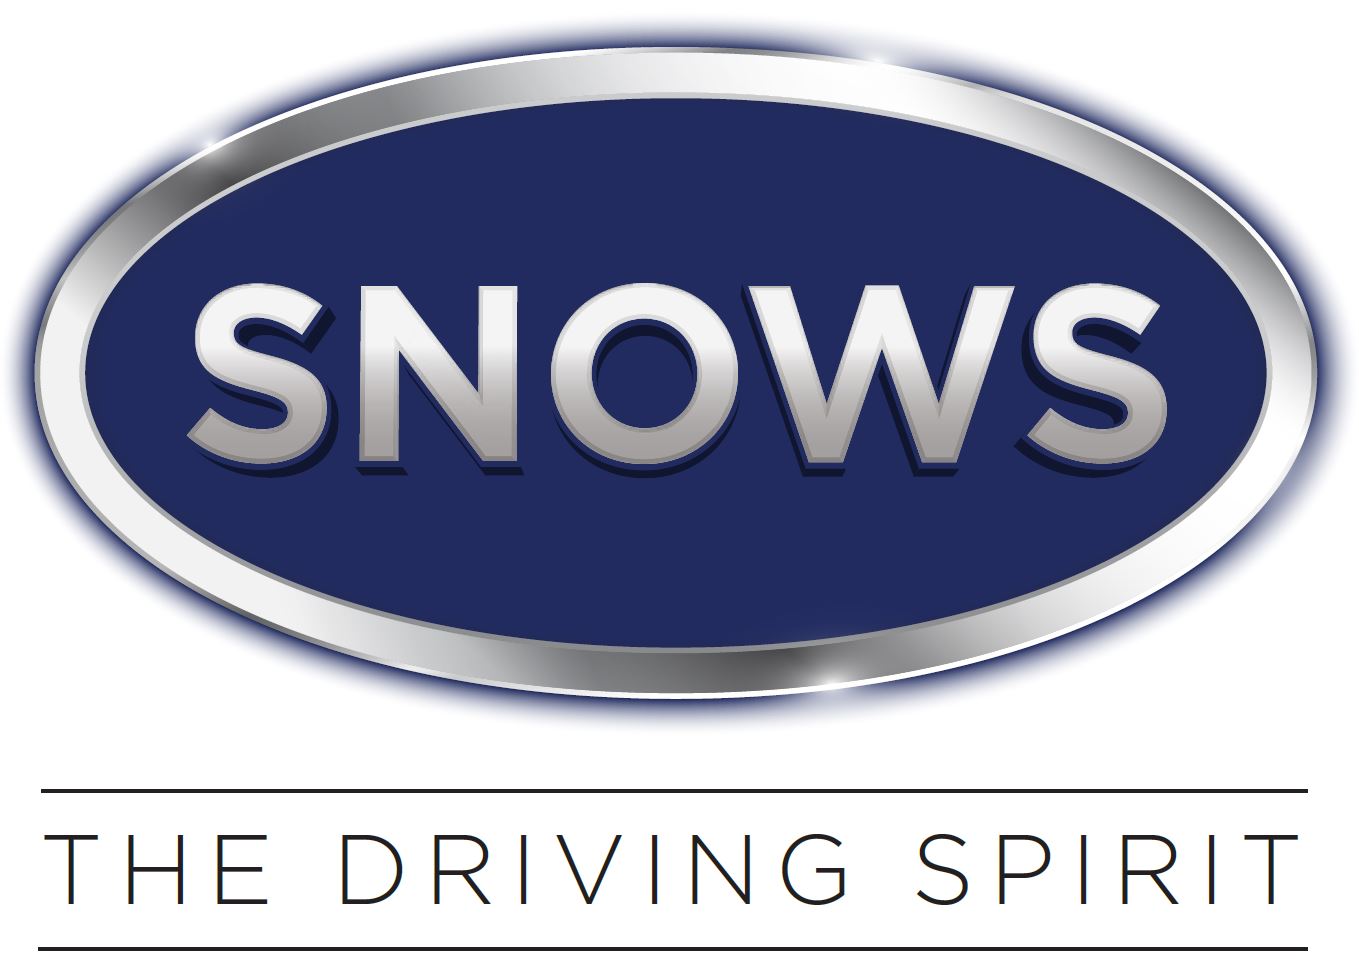 SNOWS the driving spirit